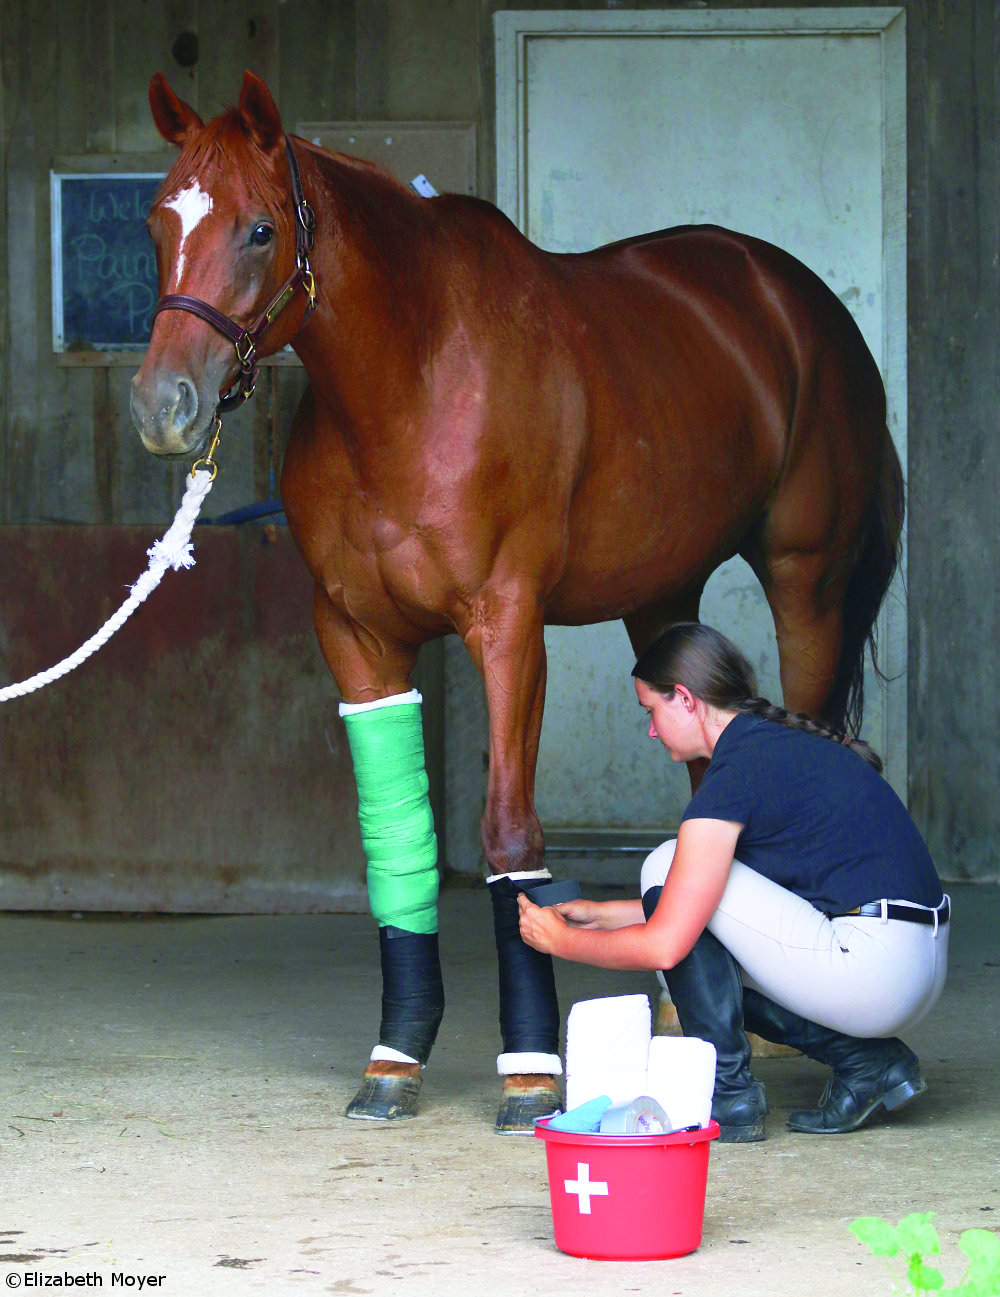 Bandaging a horse's legs